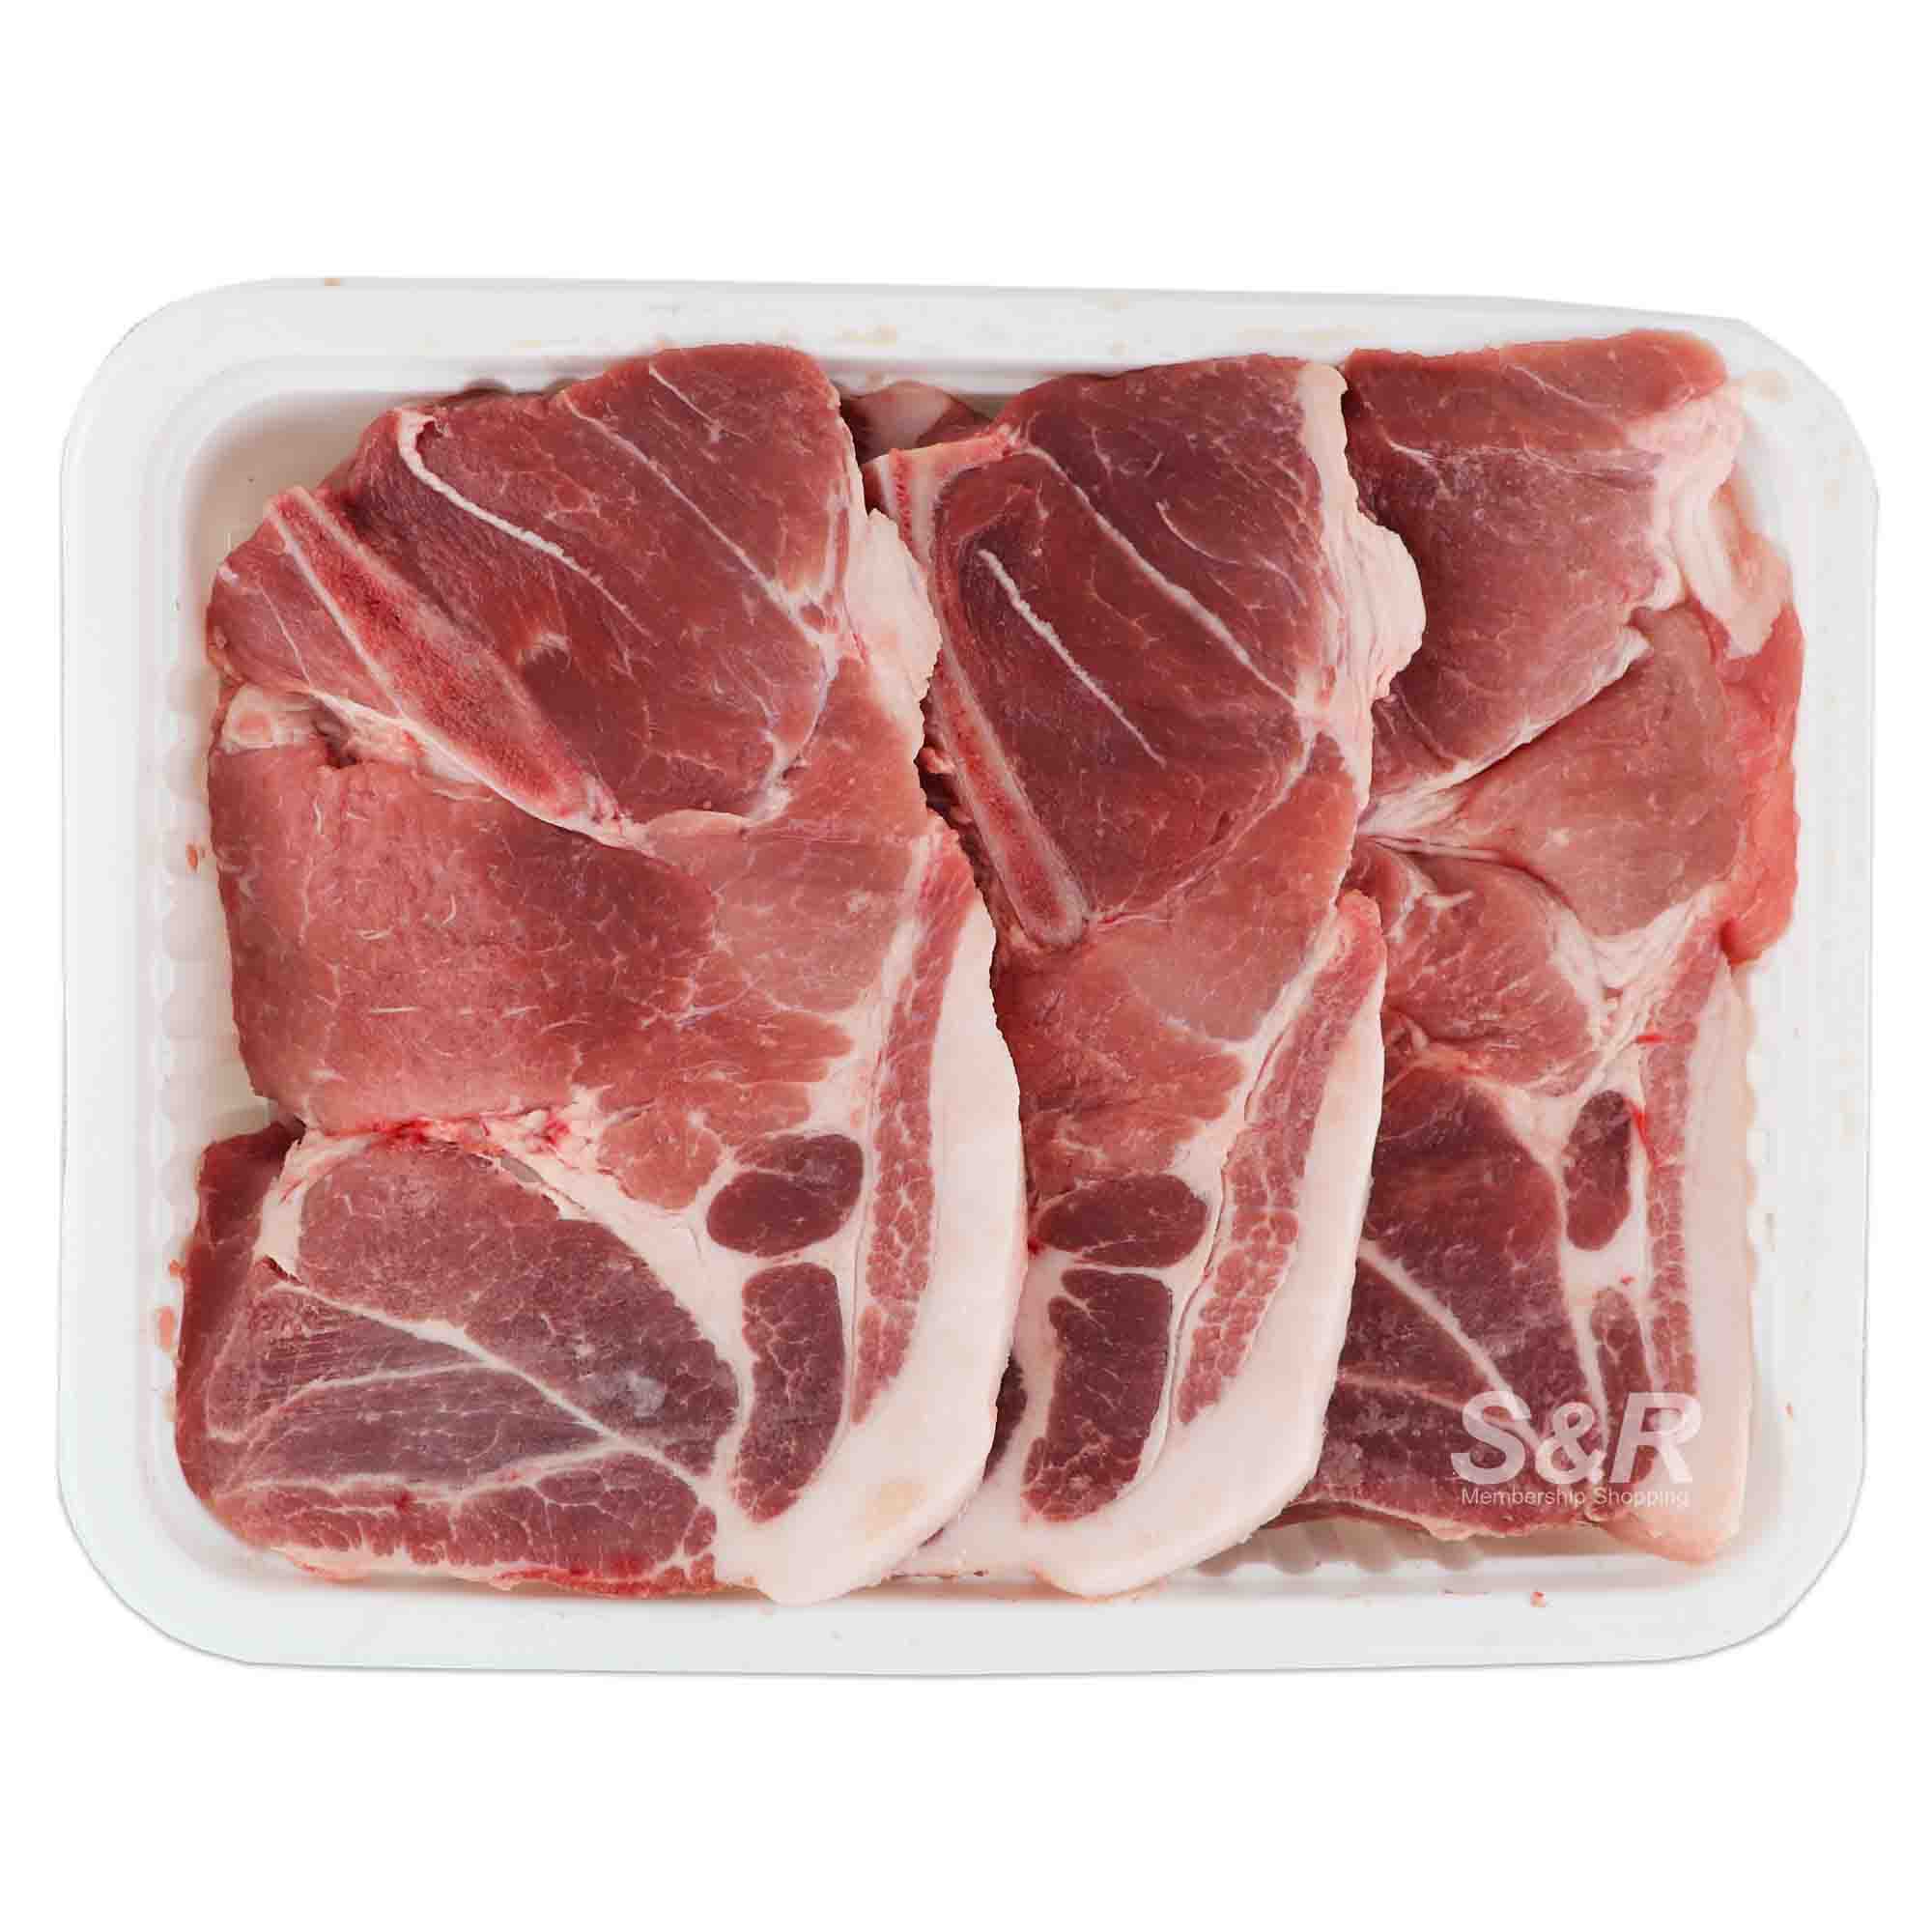 S&R Pork Steak approx. 1.7kg